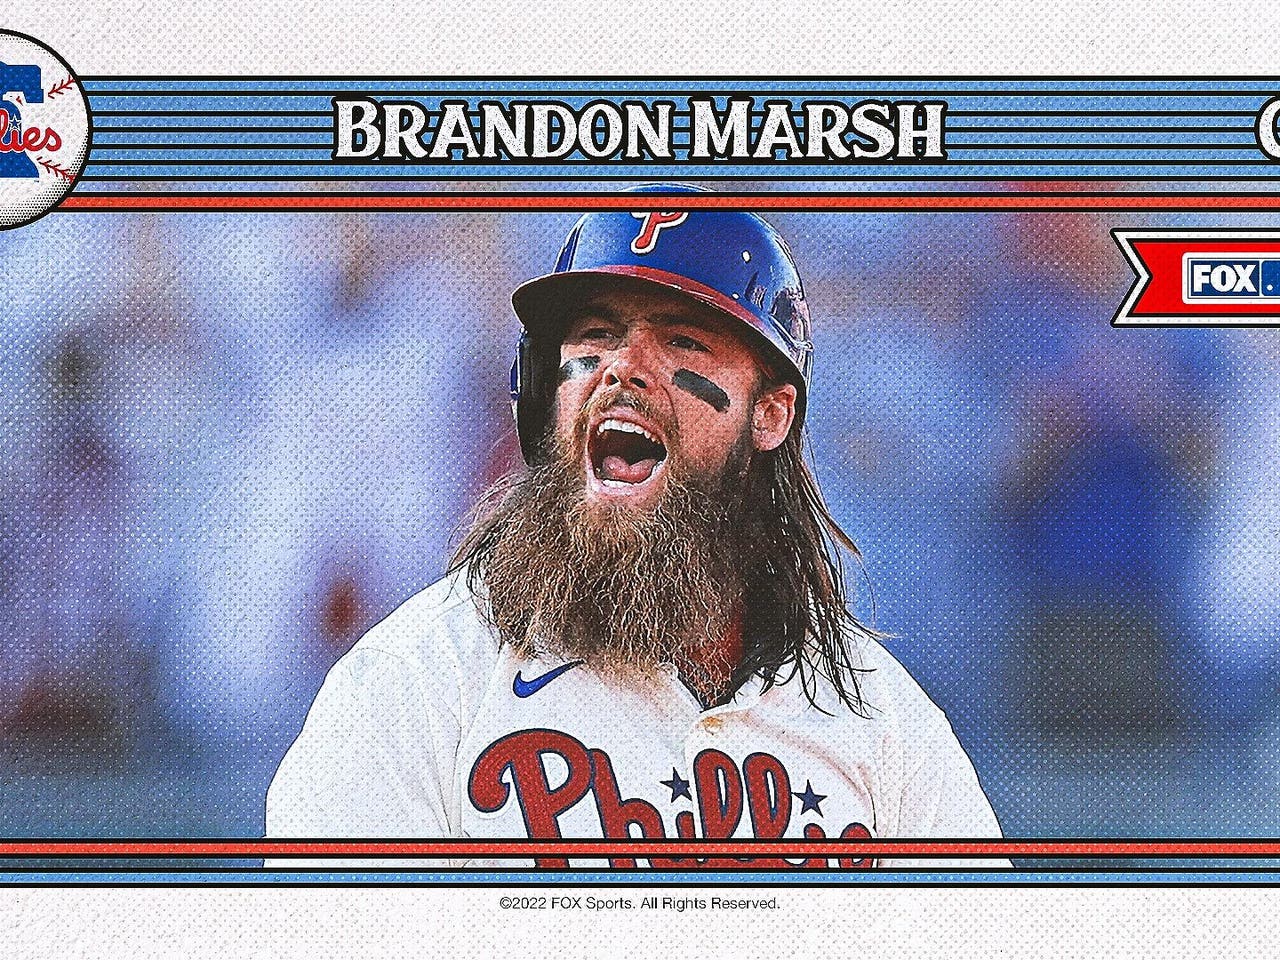 HIGHLIGHTS: The Phillies' Brandon Marsh was a BIG-TIME football